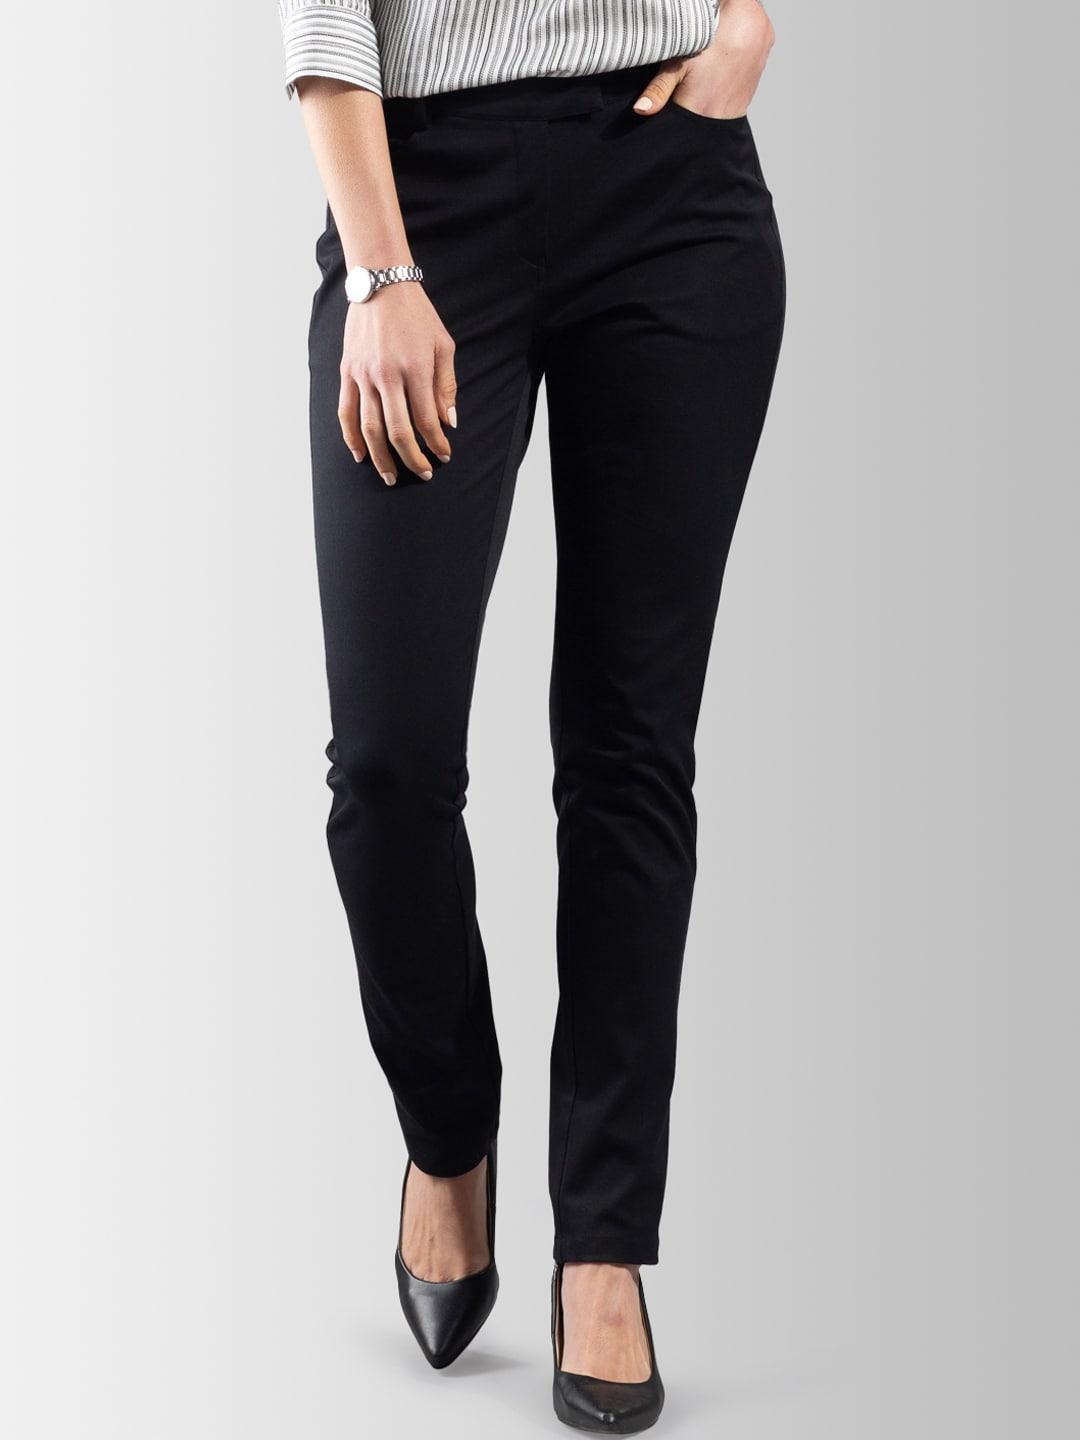 fablestreet-women-black-slim-fit-solid-cigarette-trousers